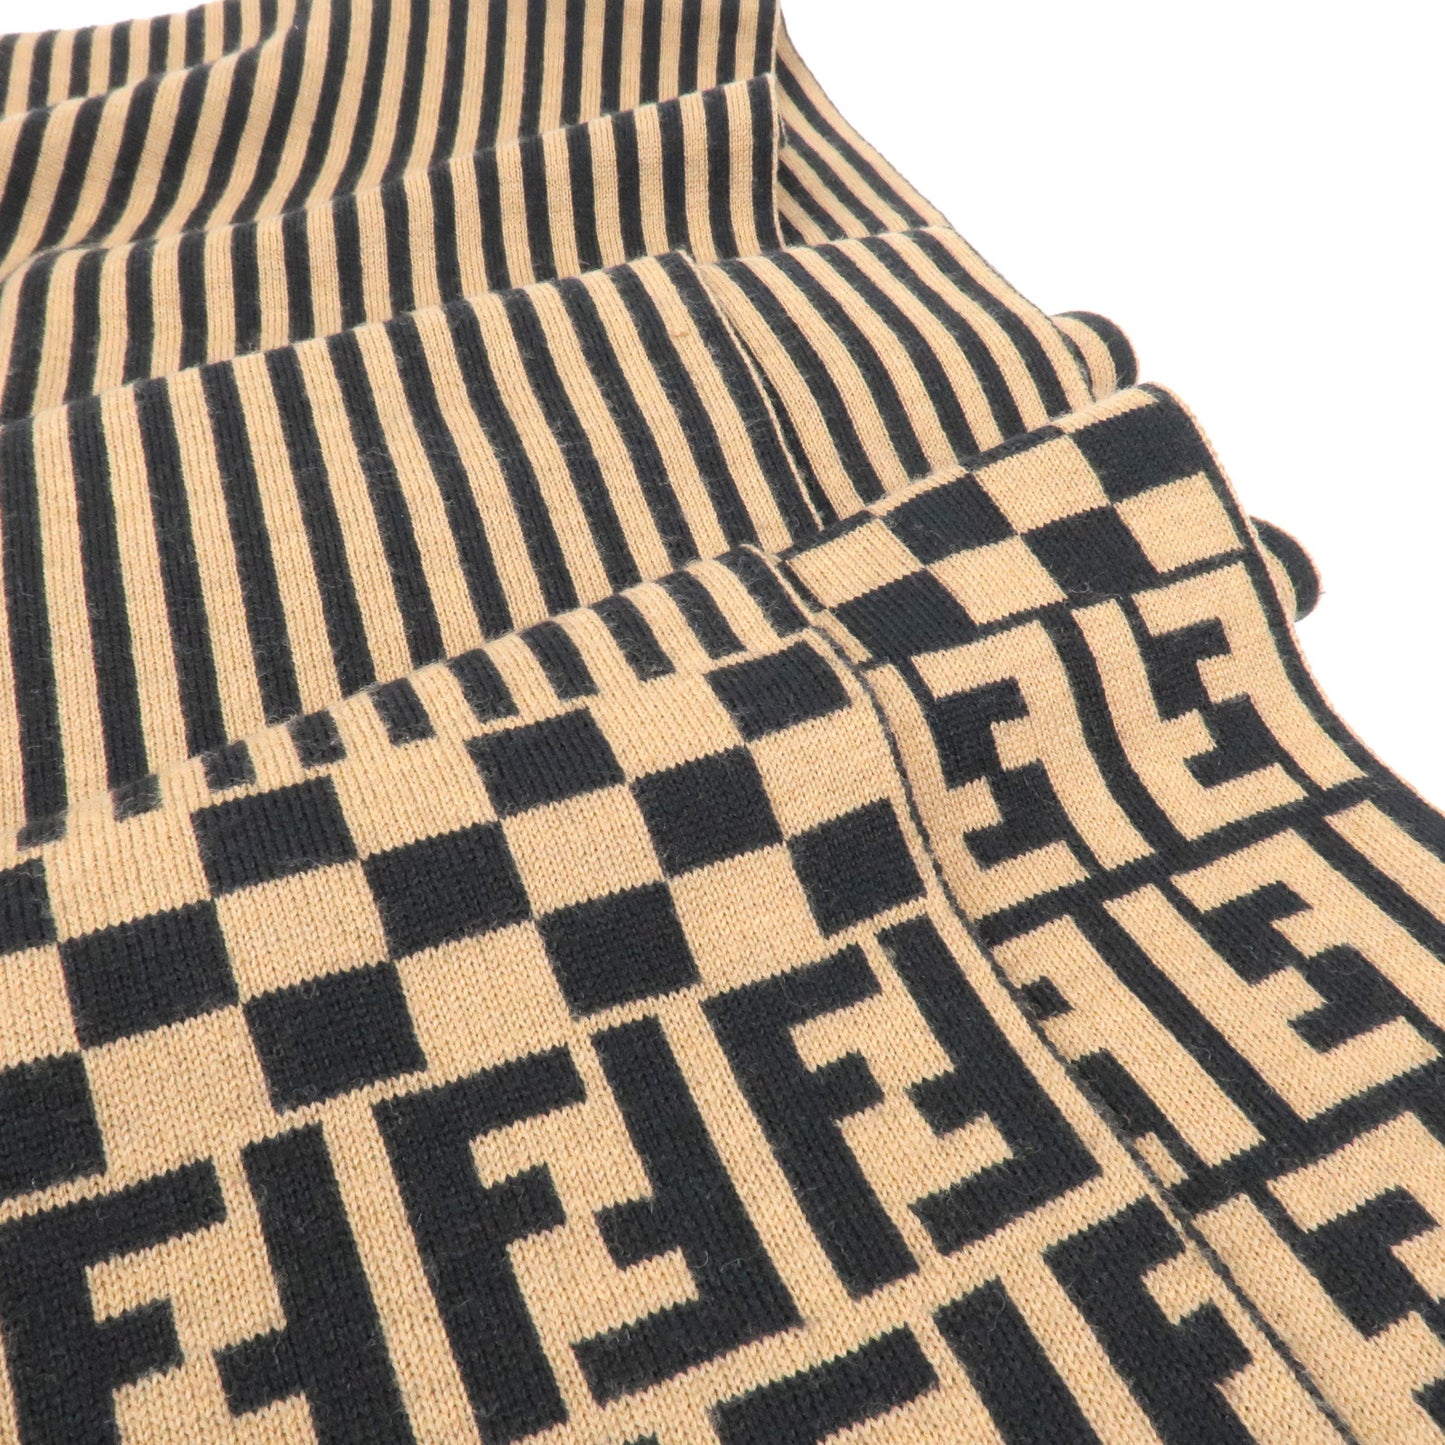 FENDI Zucca Print Wool 100% Scarf Beige Black